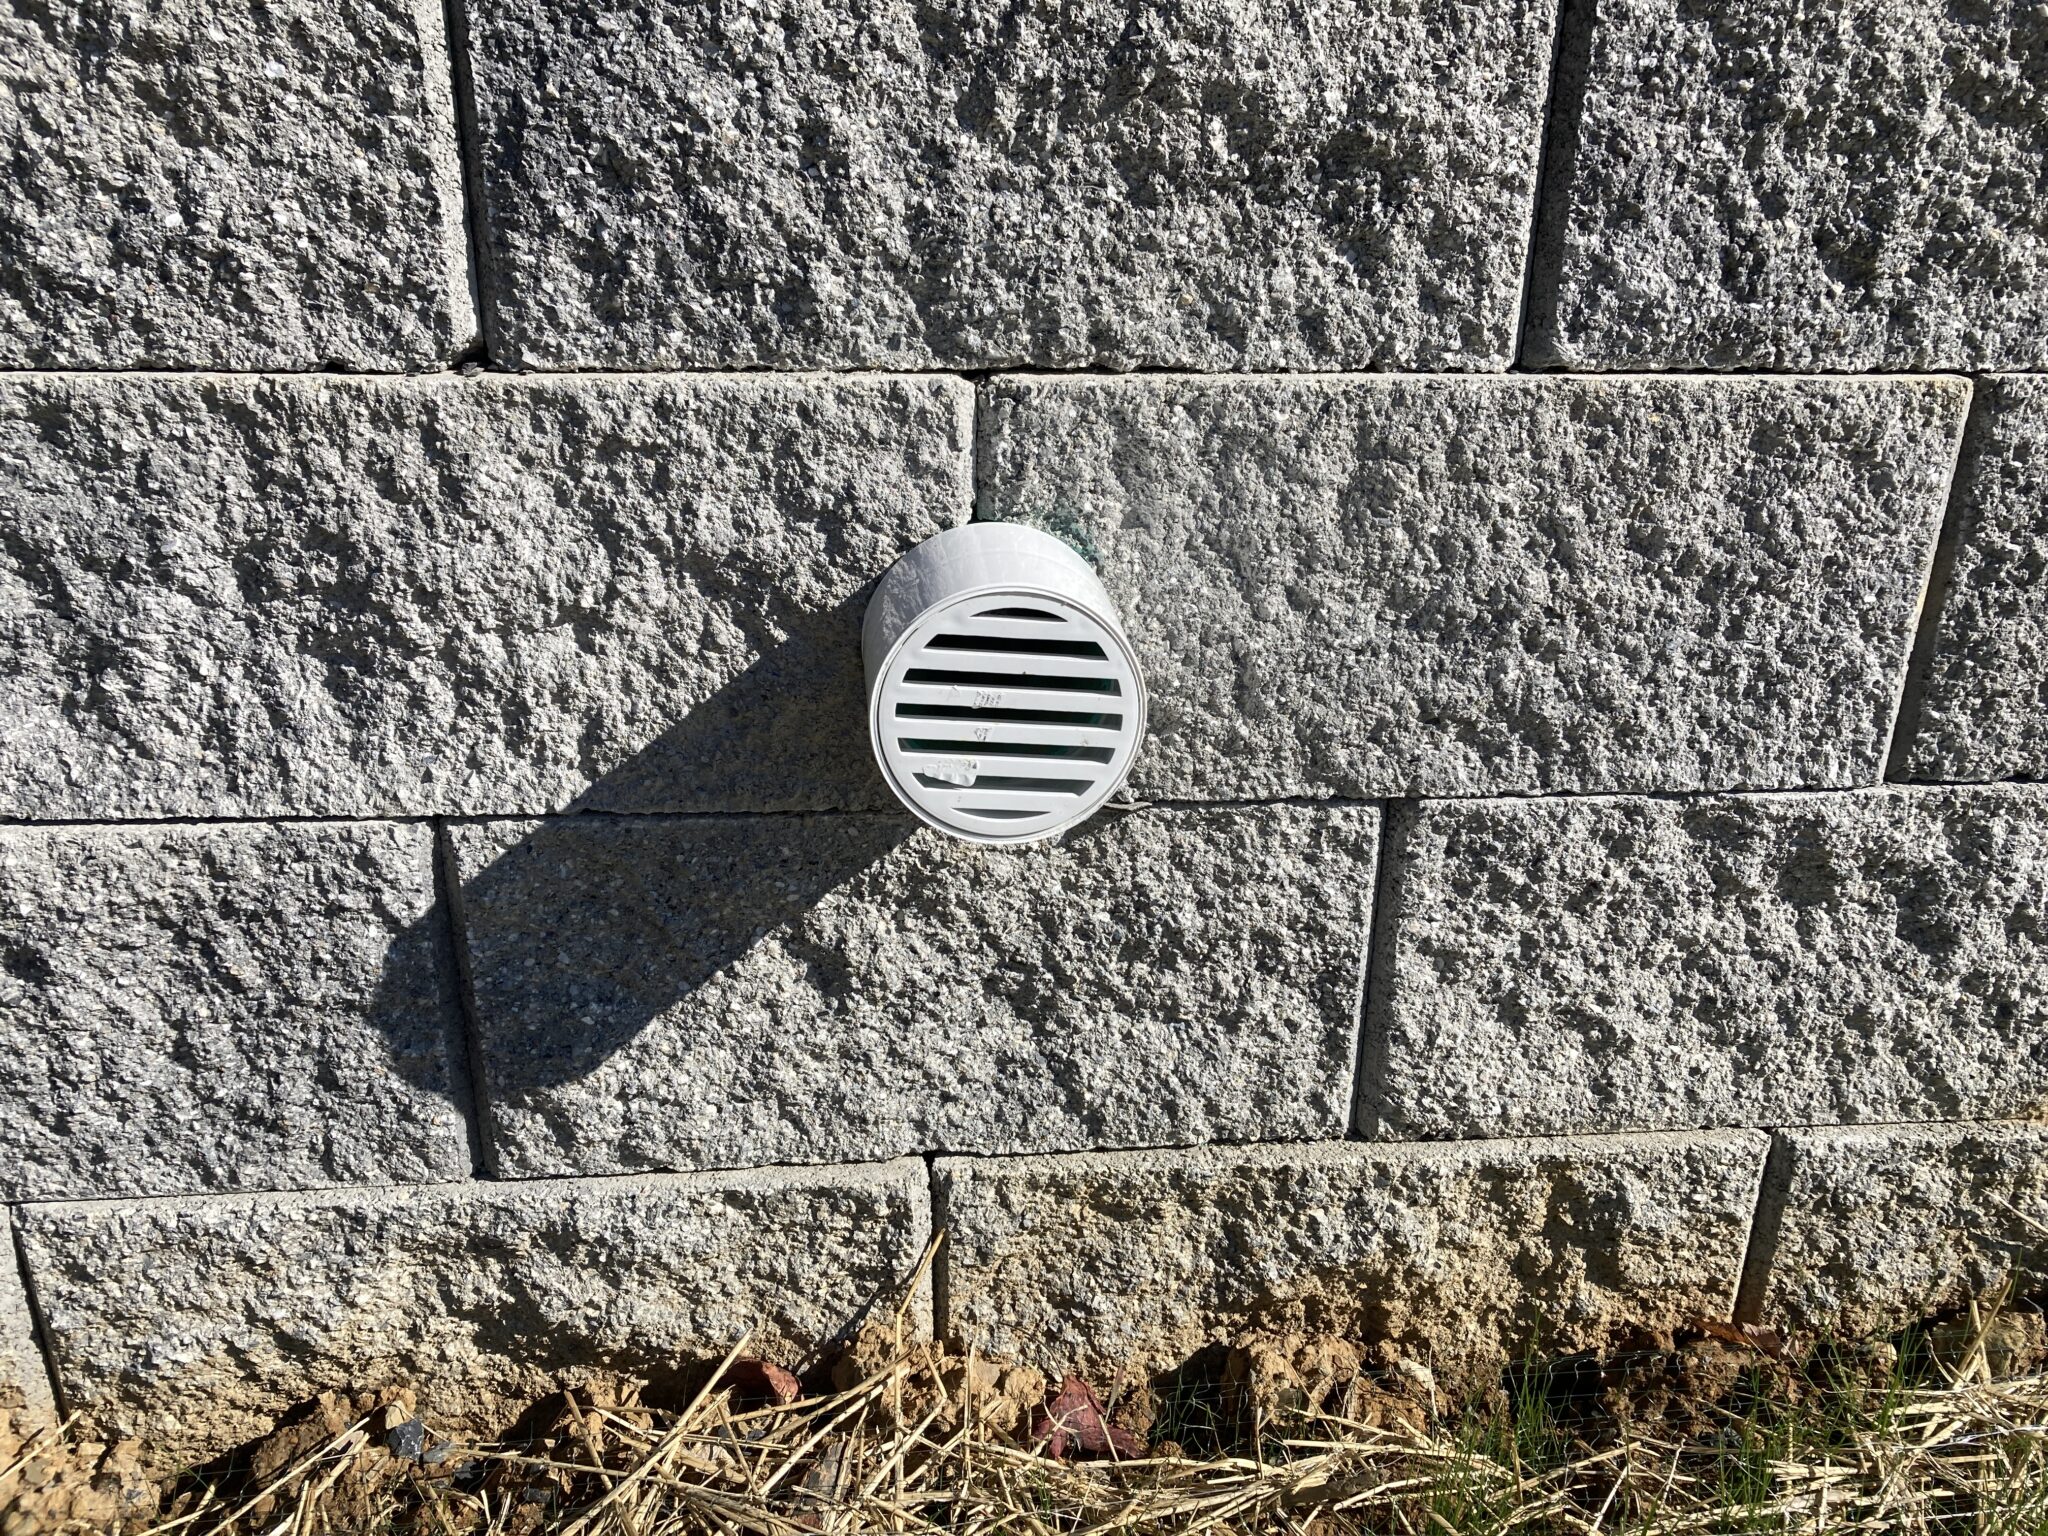 CornerStone 100 retaining wall block face drainage.